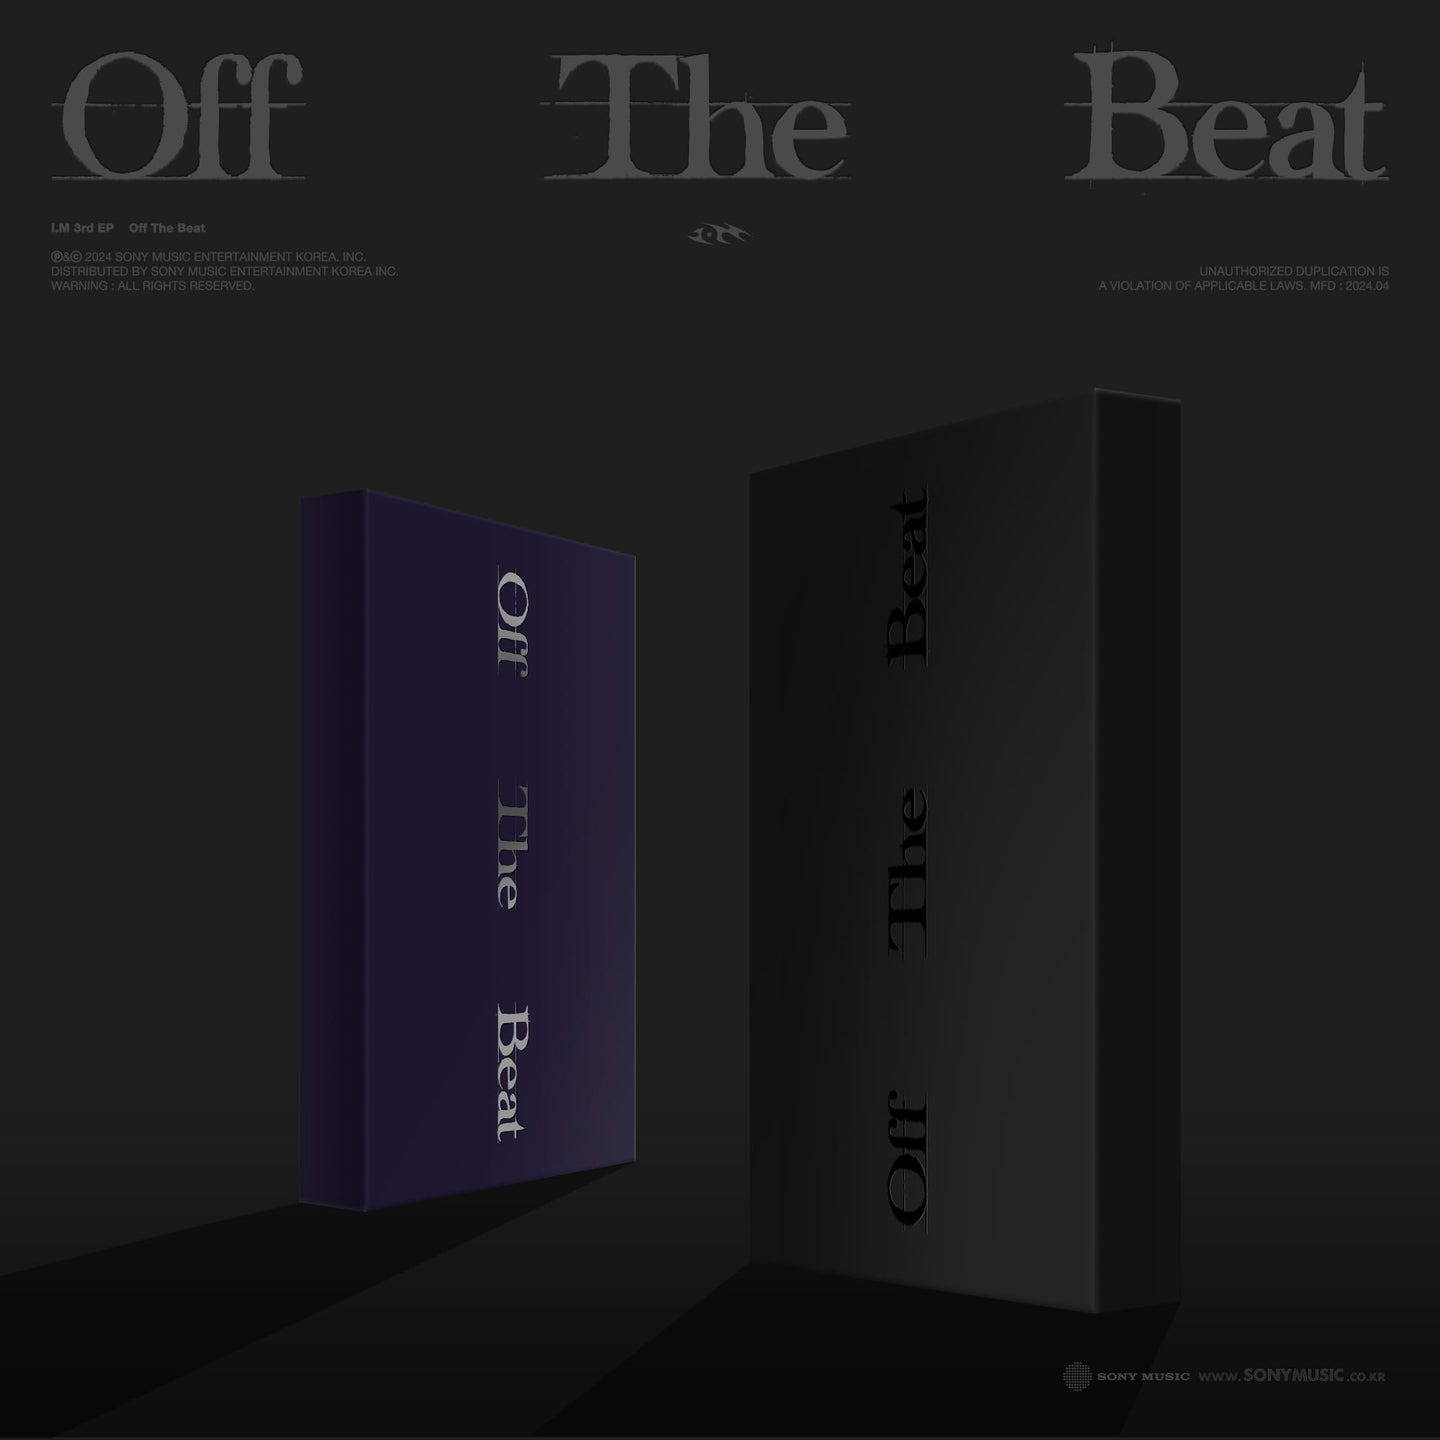 I.M – Off The Beat (Photobook Ver.)